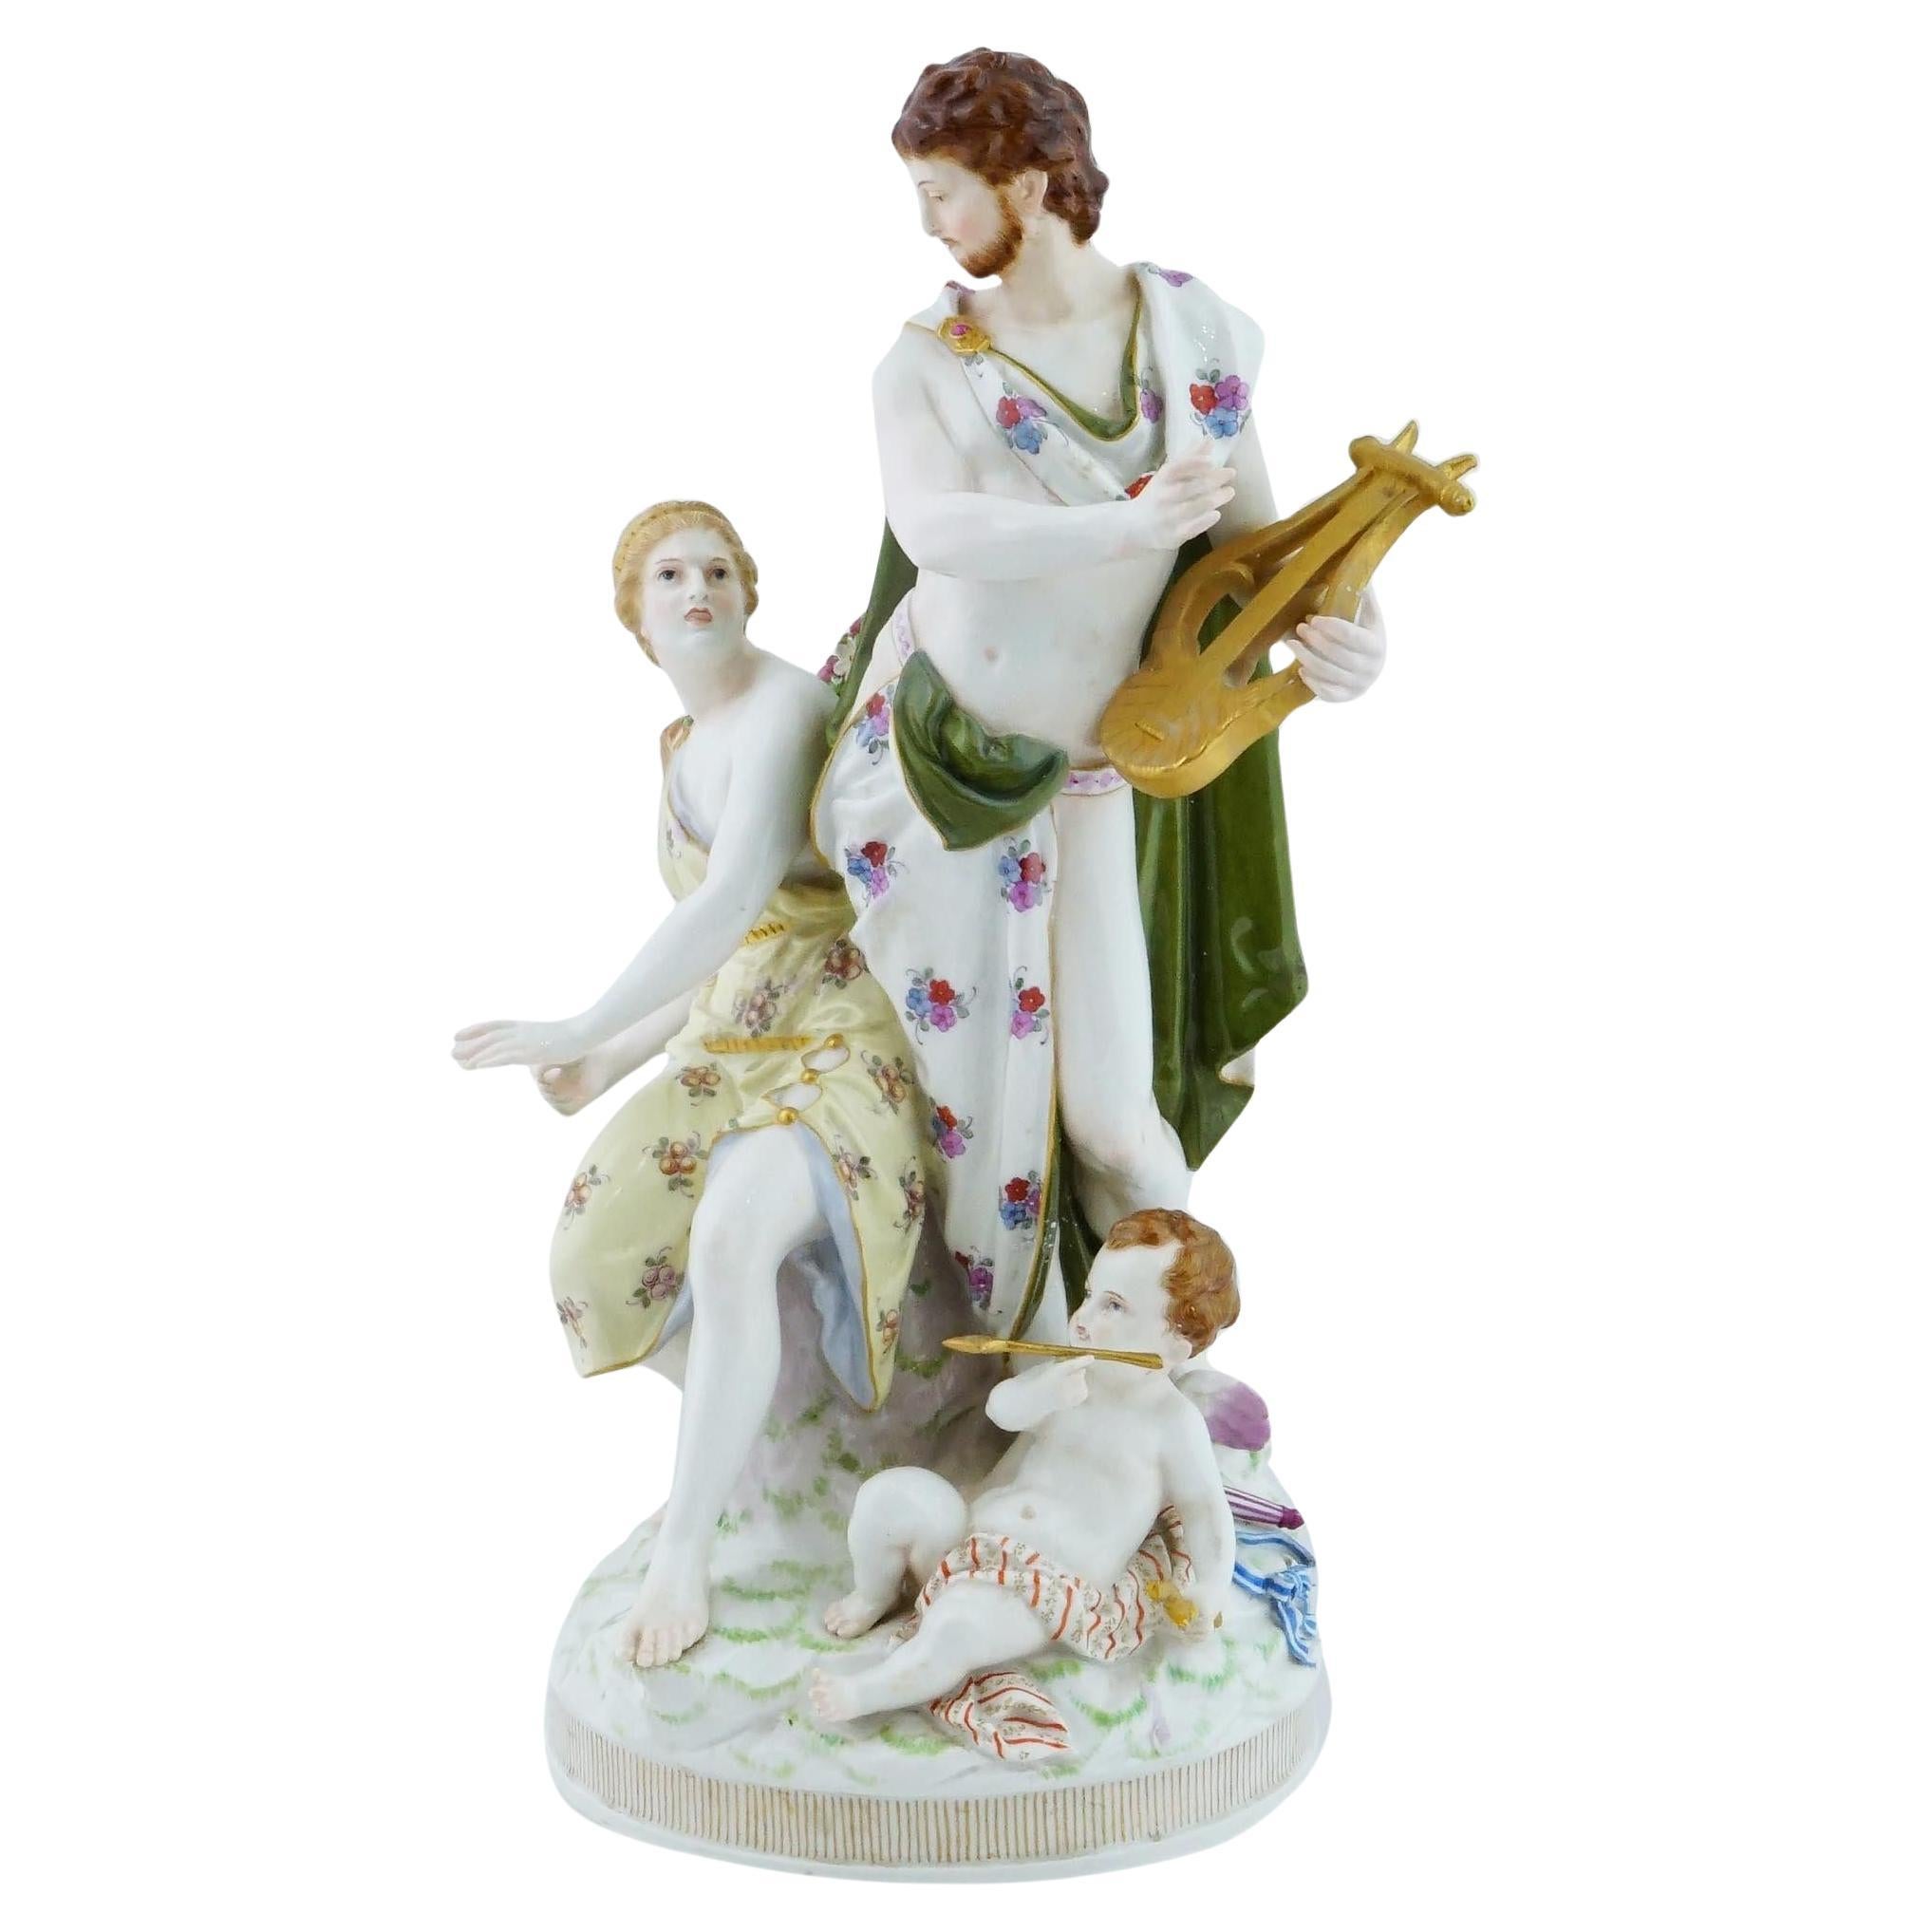 KPM Porcelain Figurine Depicting Orpheus and Eurydice For Sale